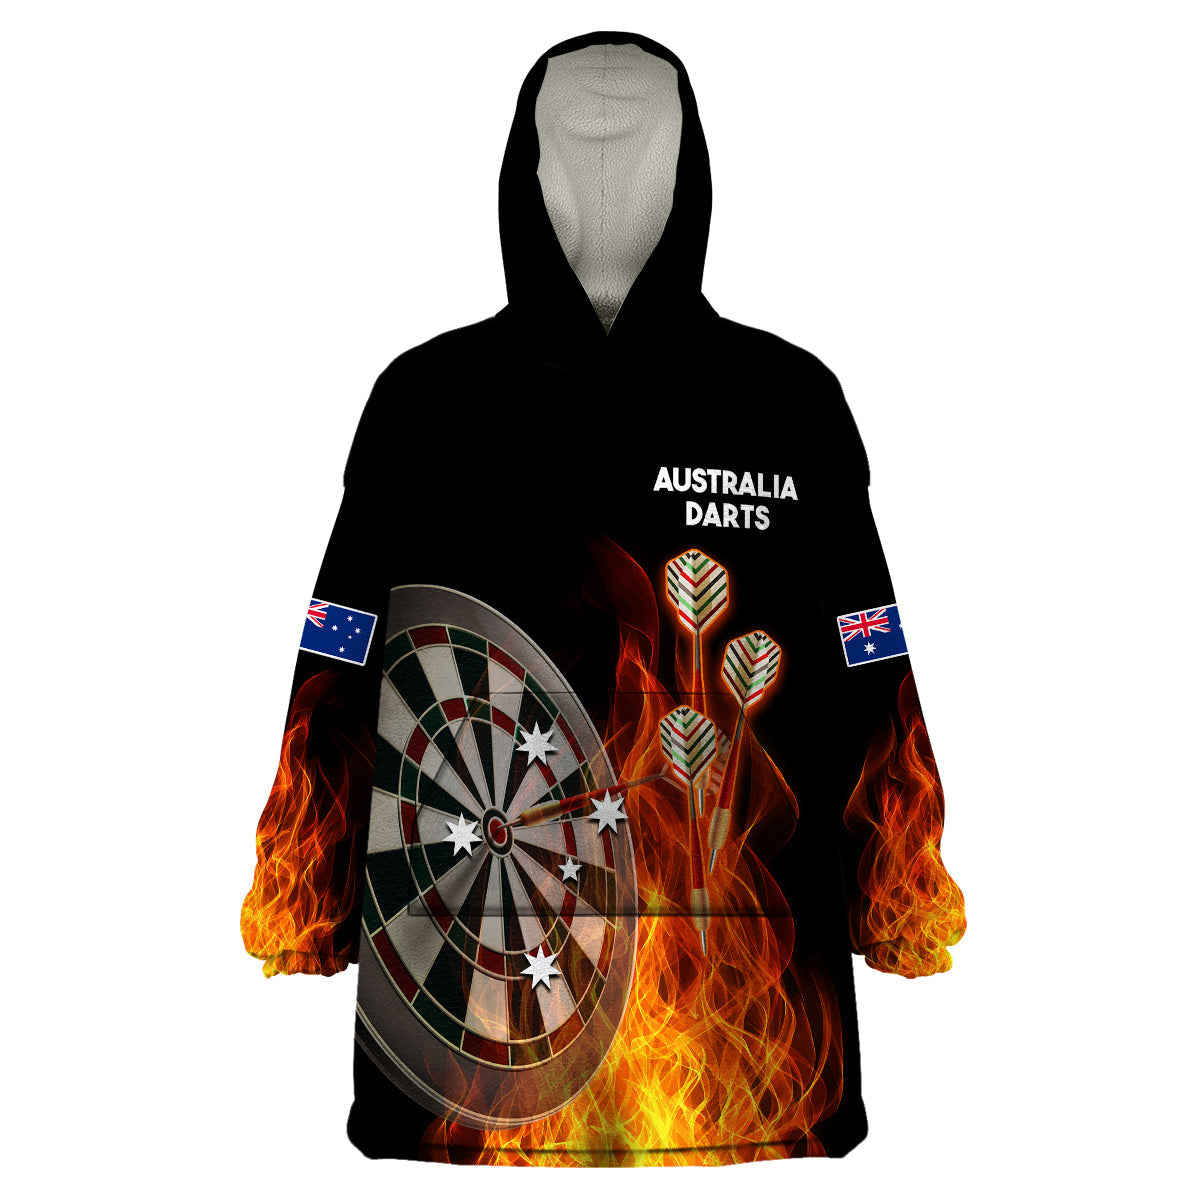 australia-darts-fire-burning-black-style-wearable-blanket-hoodie